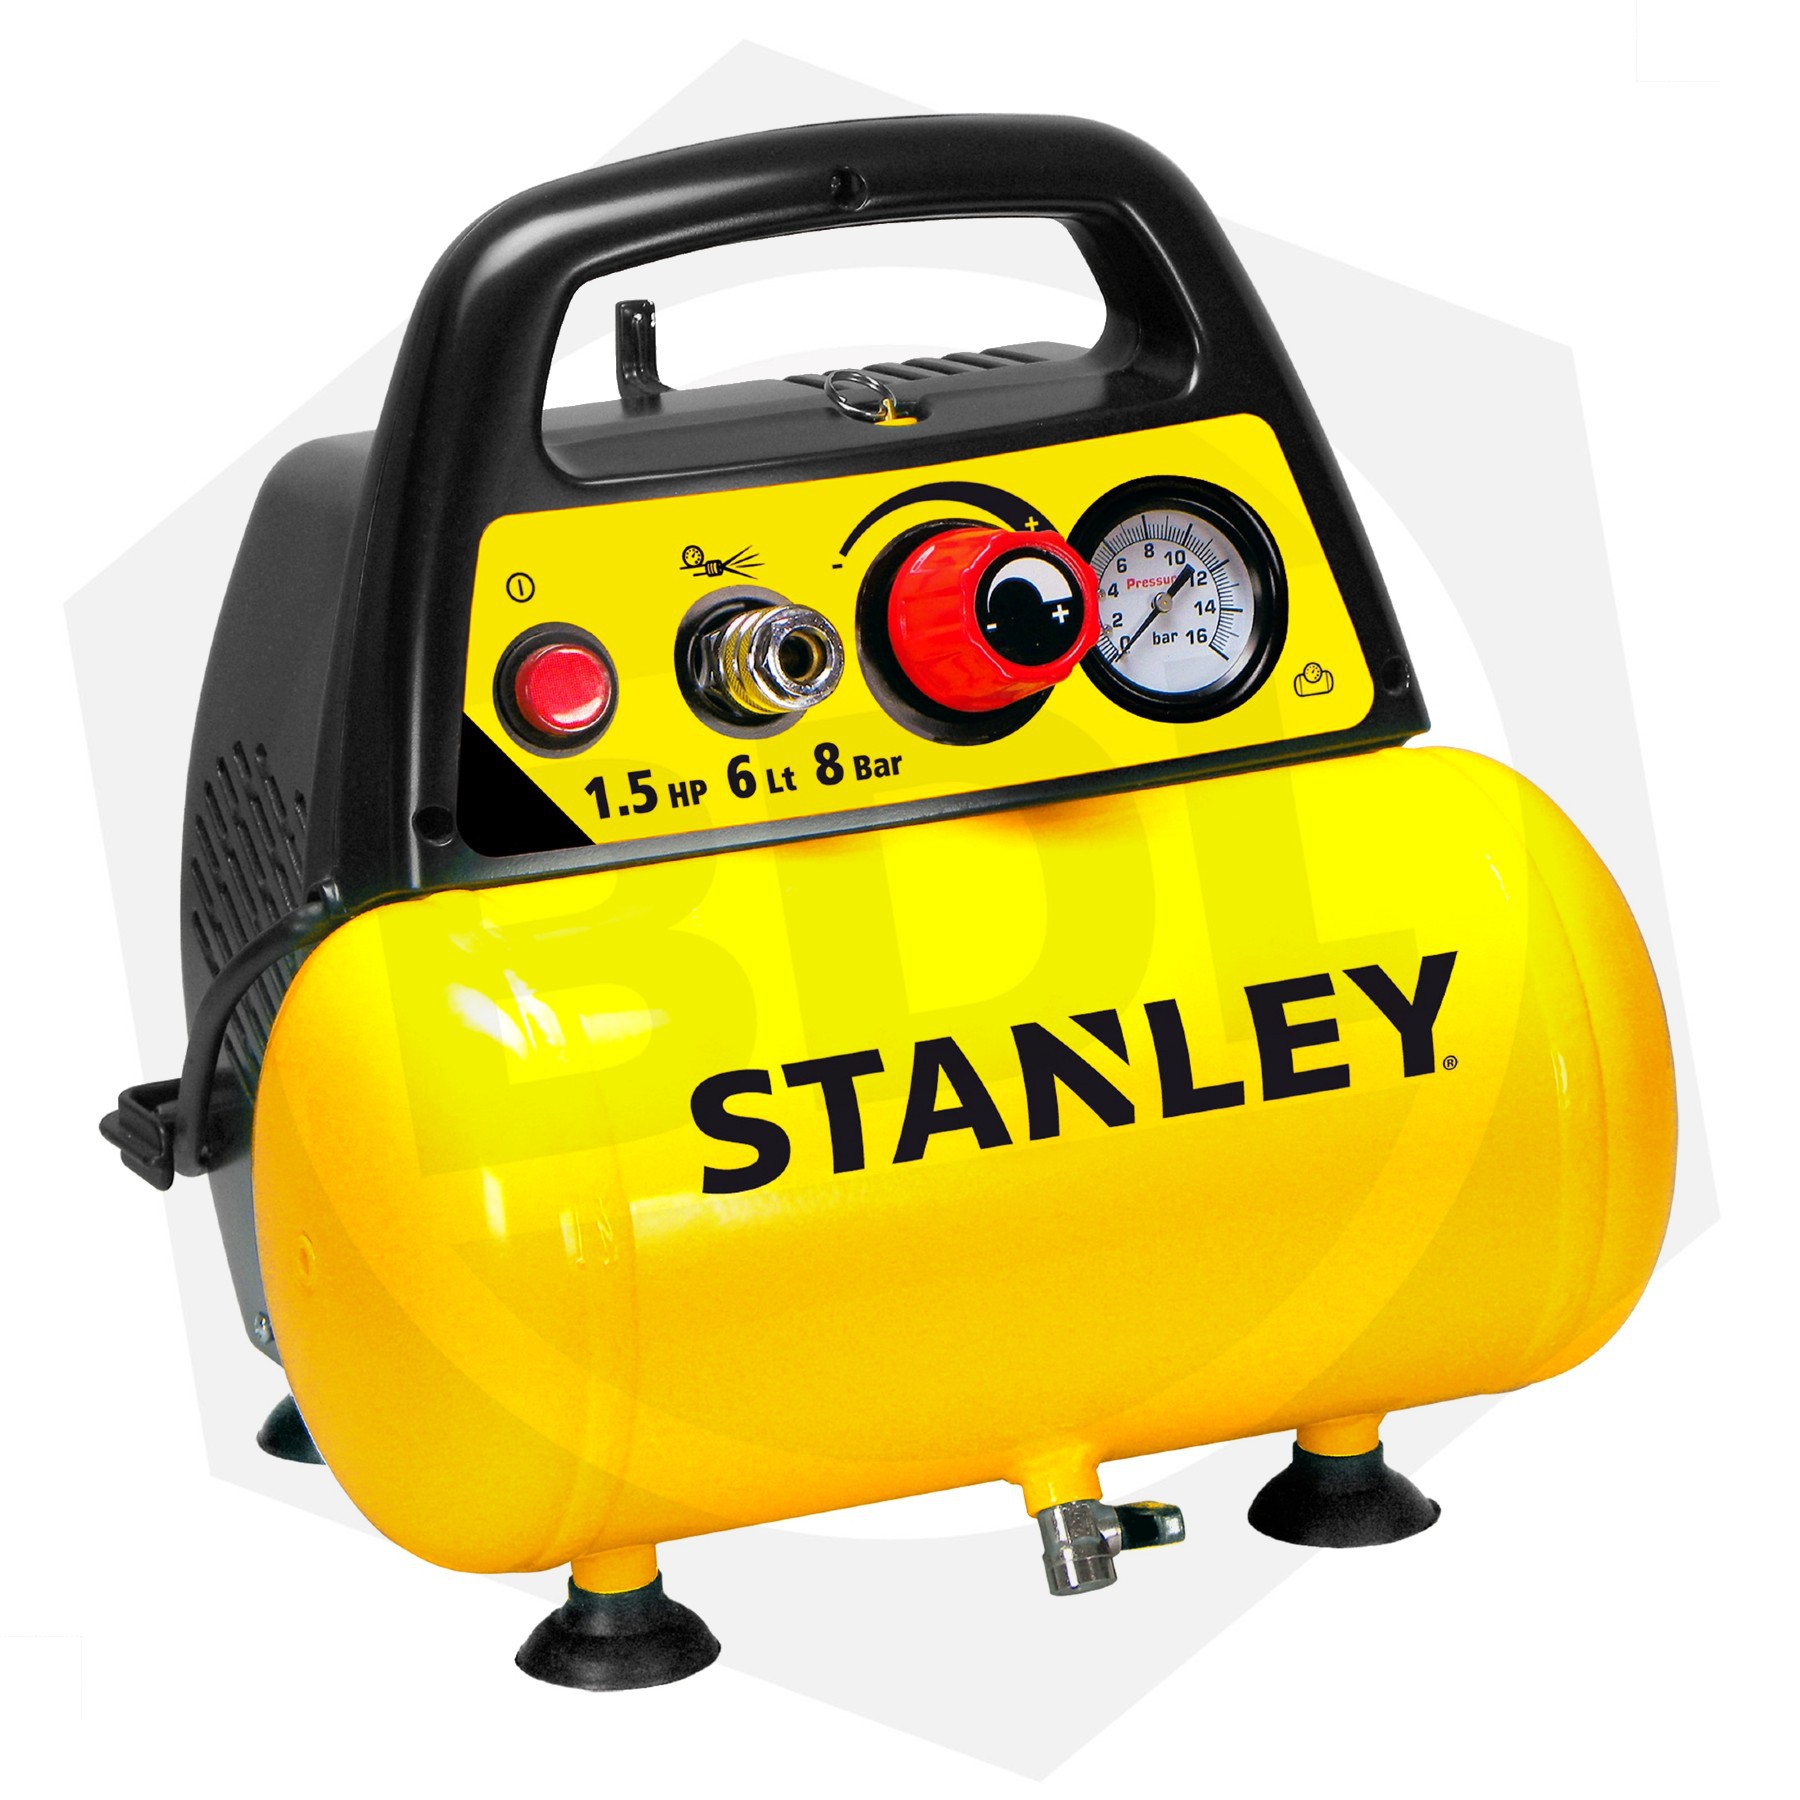 Compresor Portátil Stanley C6BB304STC071 - 6 Litros / 1.5 HP